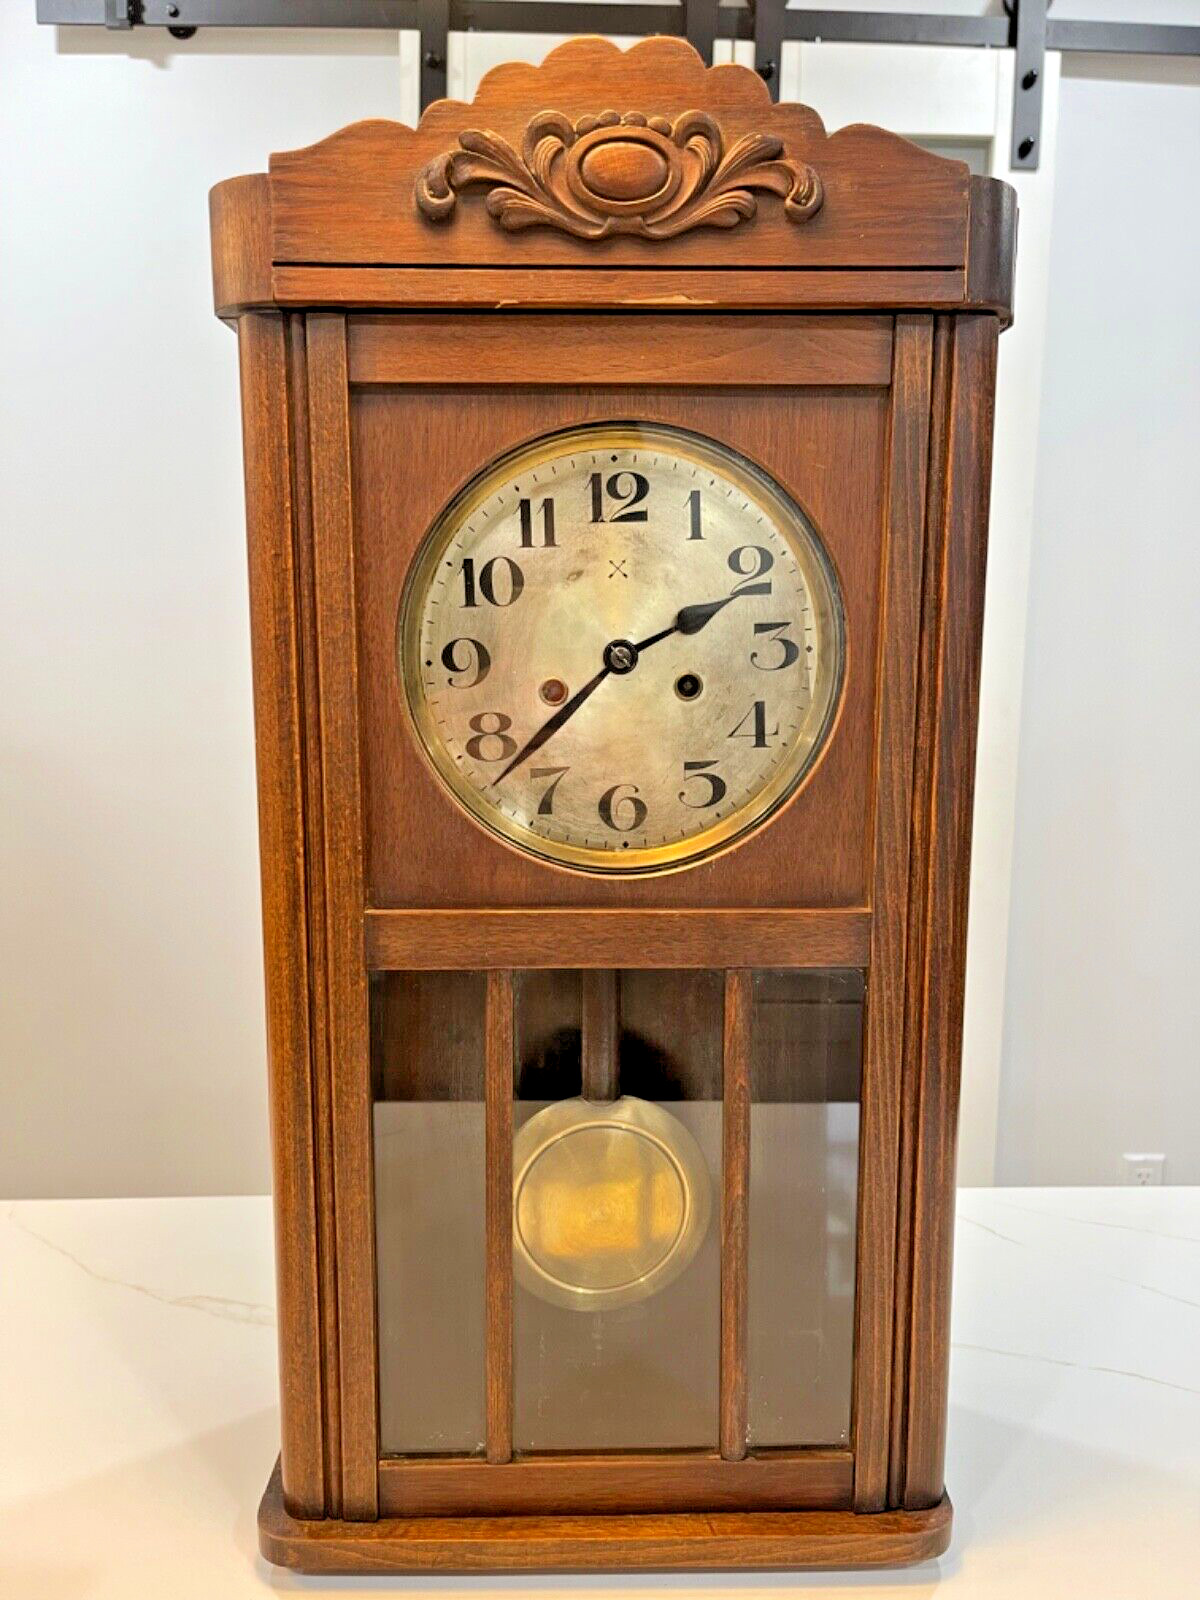 Antique German H.A.C. - Hamburg American Corp chime wall clock